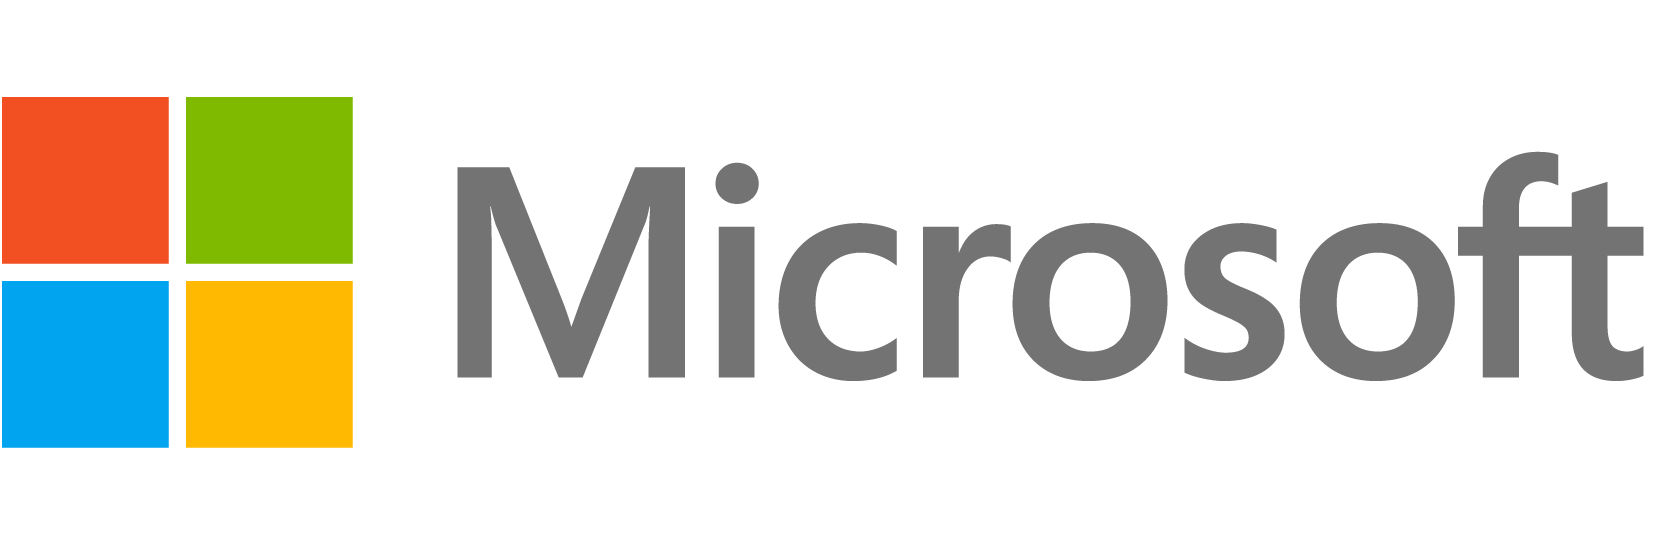 microsoft logo, microsoft symbol, meaning, history png #2407